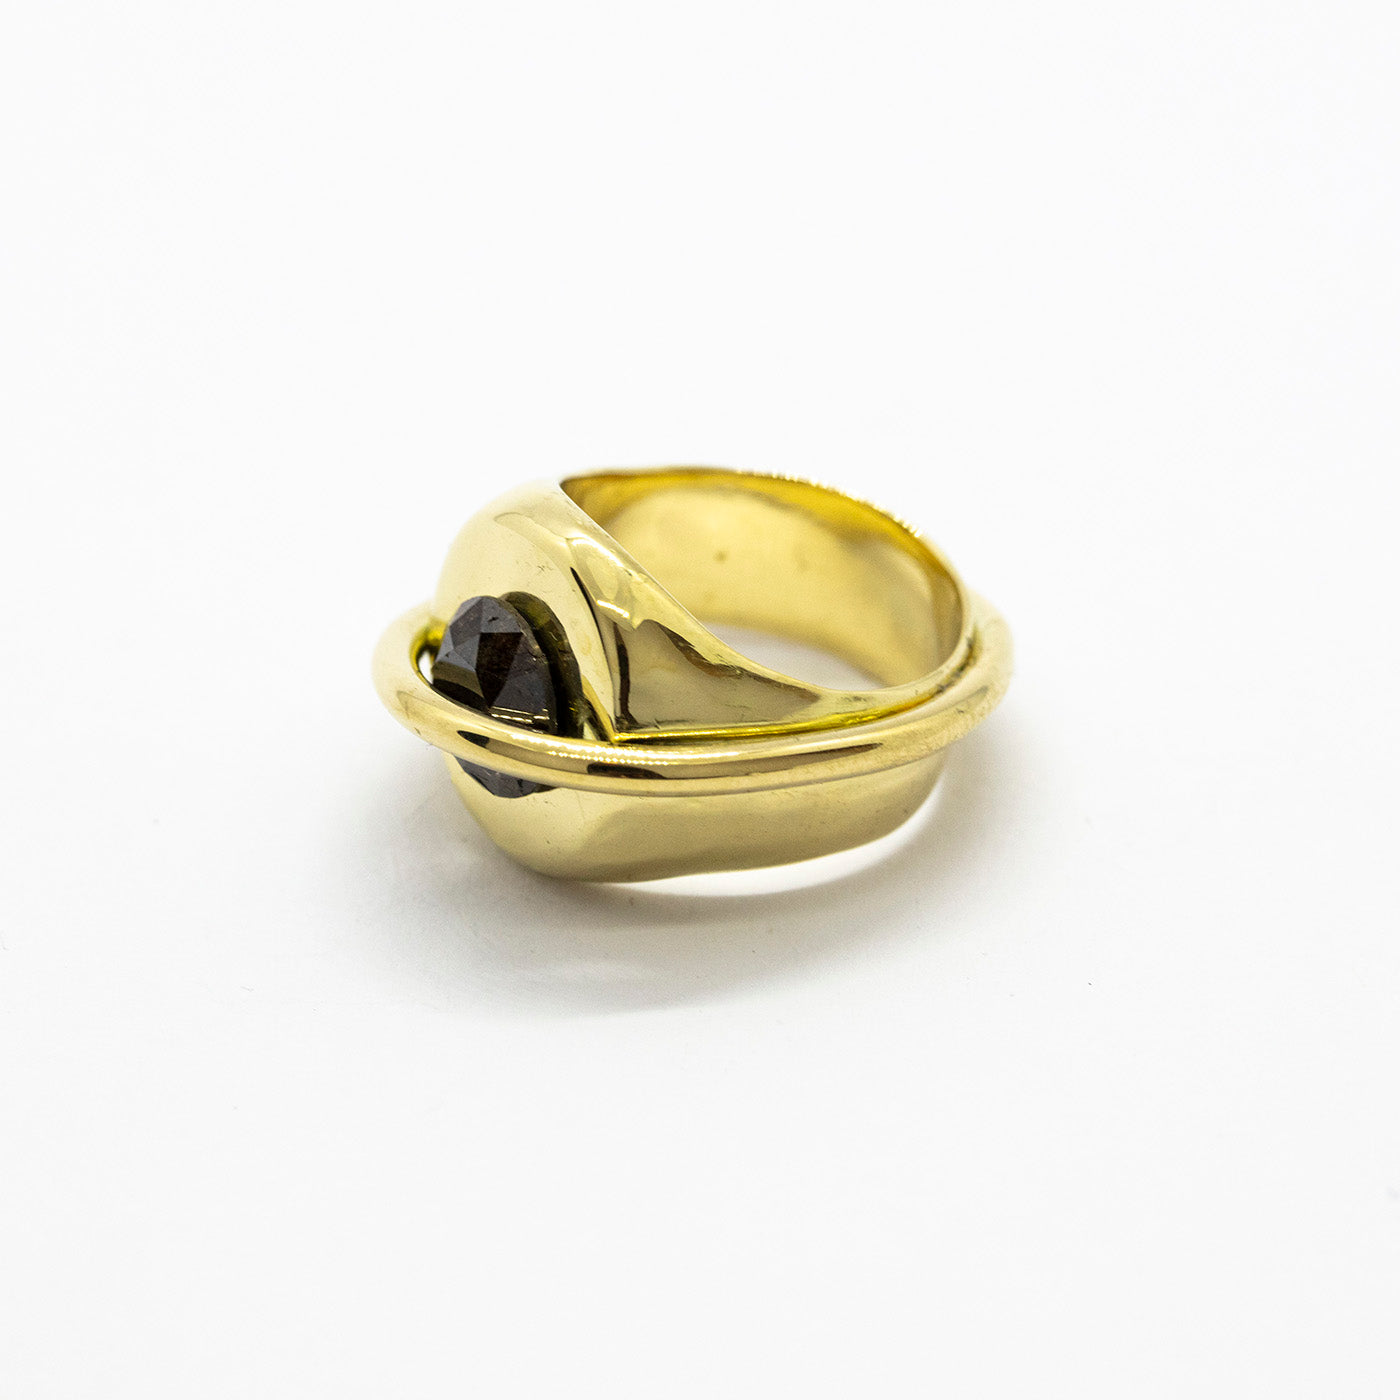 Chaotic Signet ring 18ct yellow gold 2,3ct dark amber diamond innan jewellery independent atelier berlin